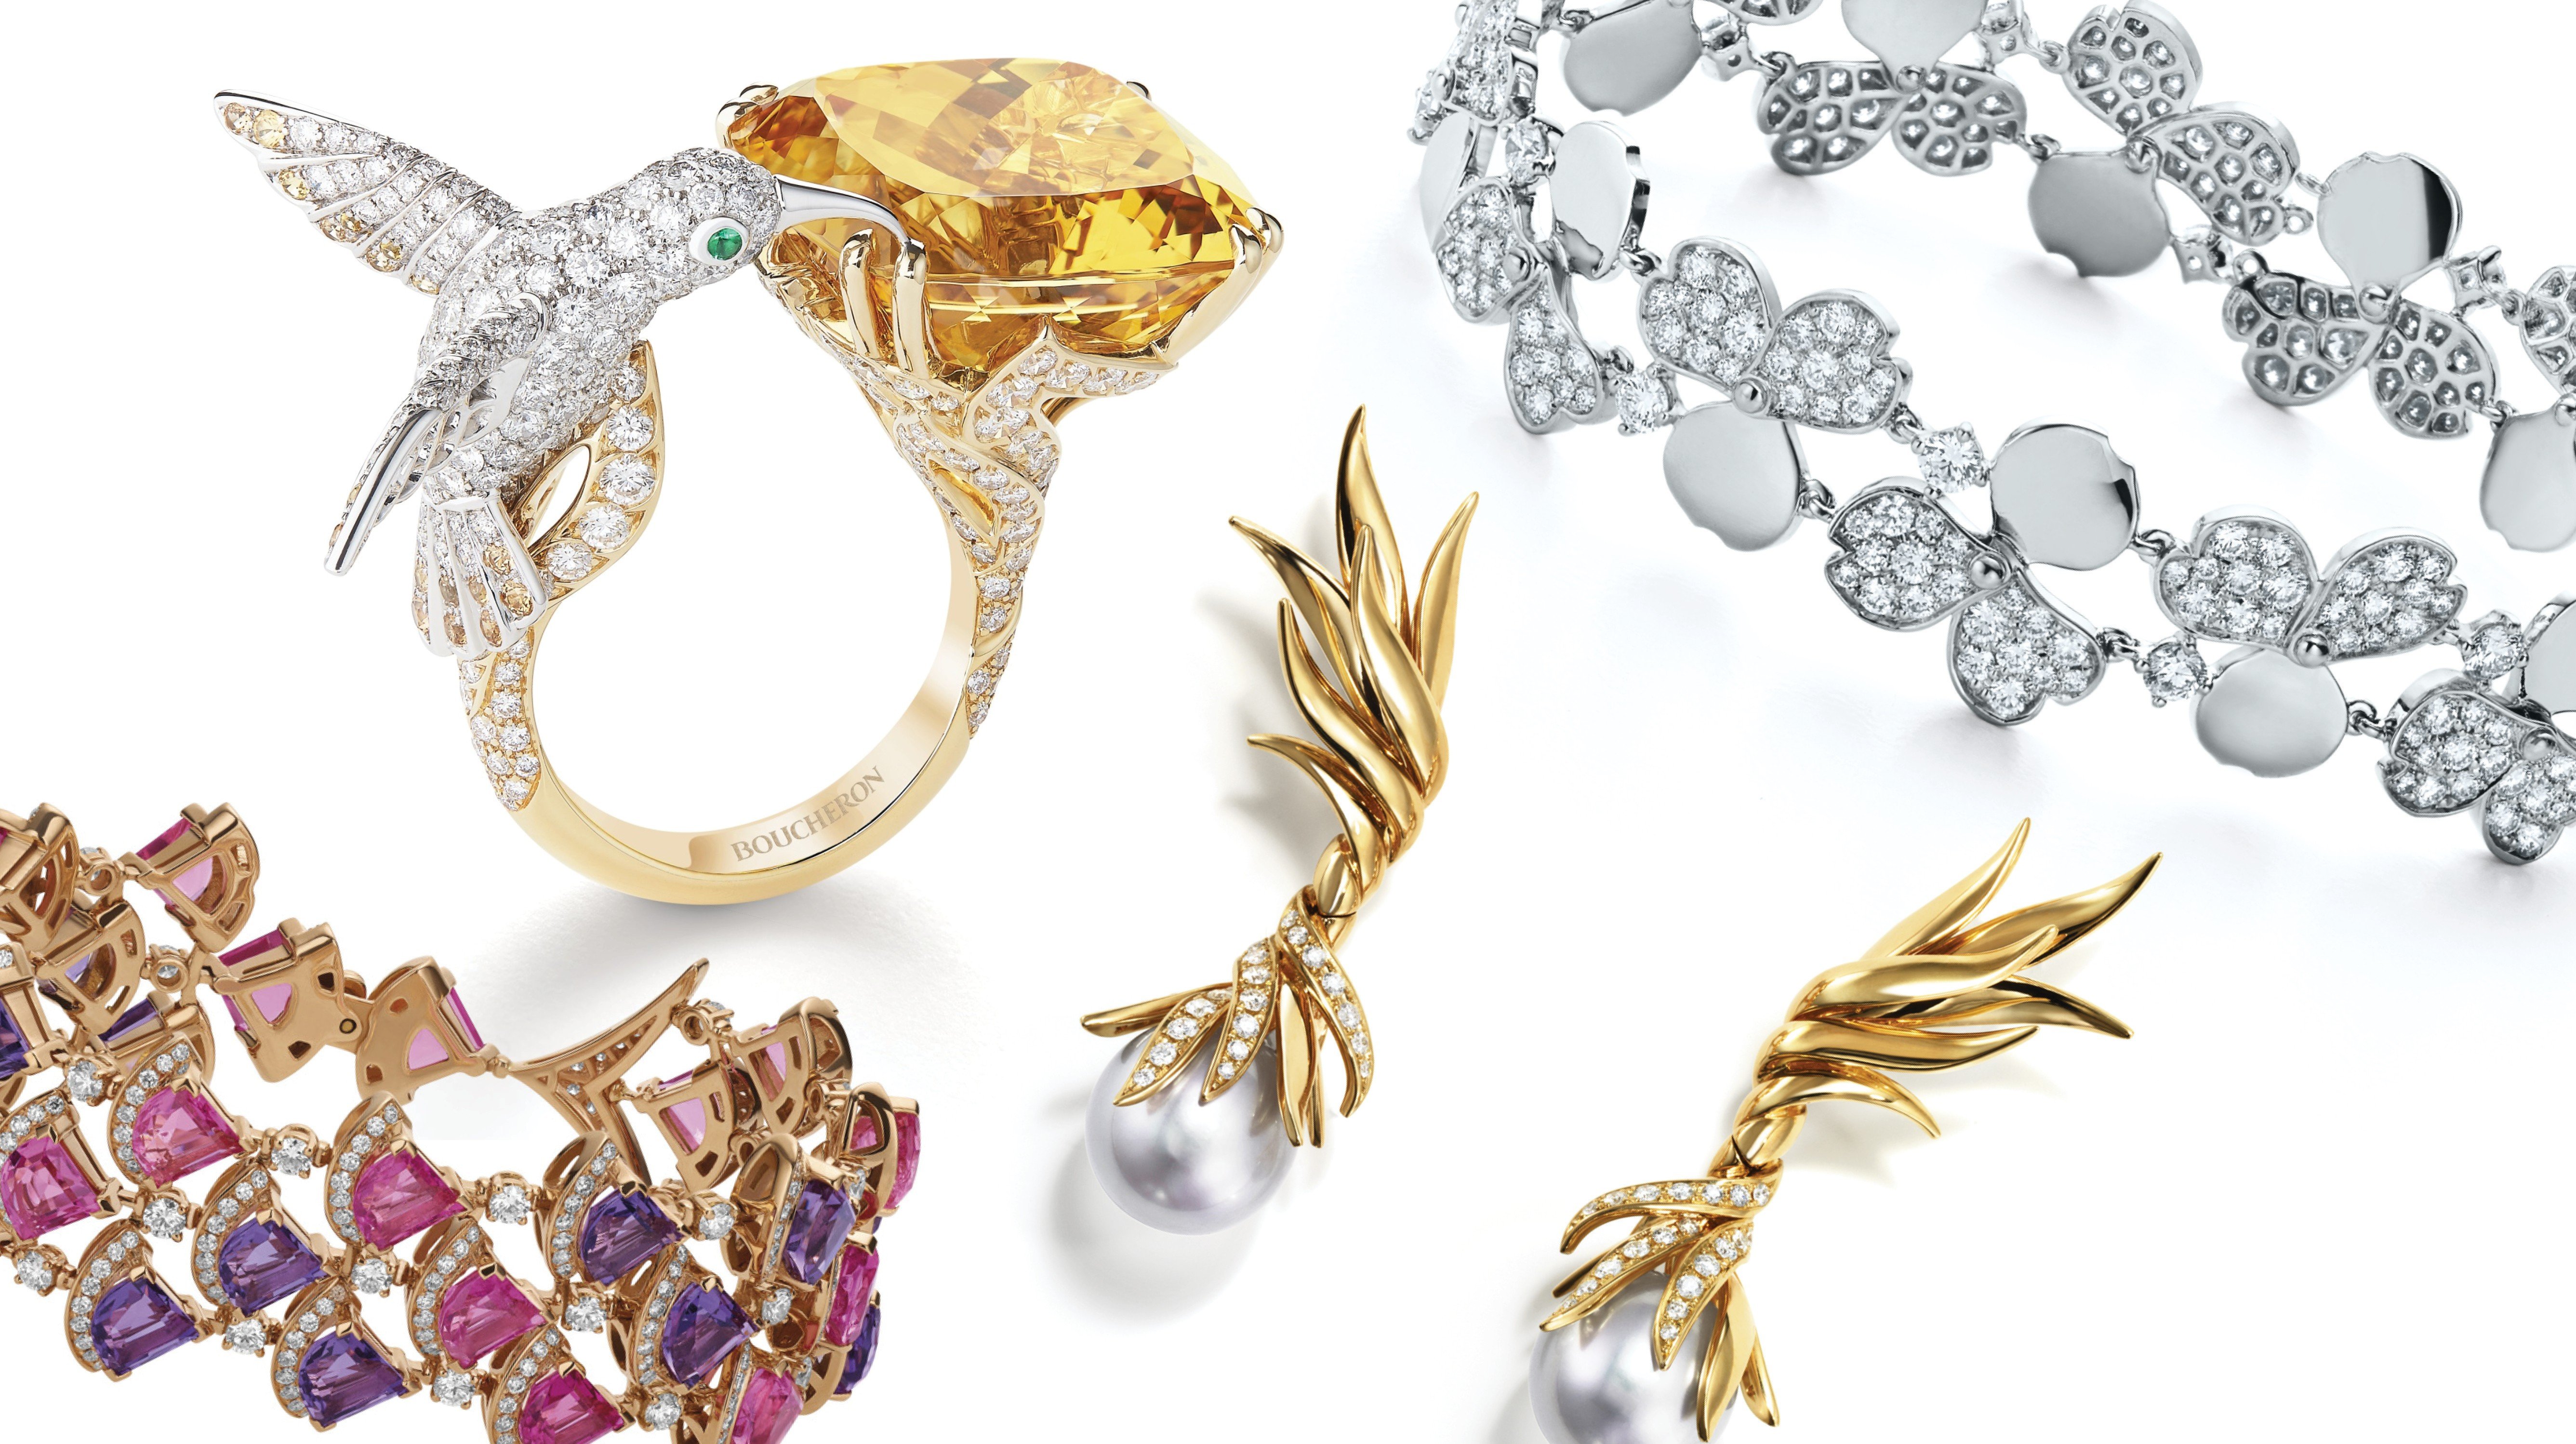 Tiffany among high jewellery brands 